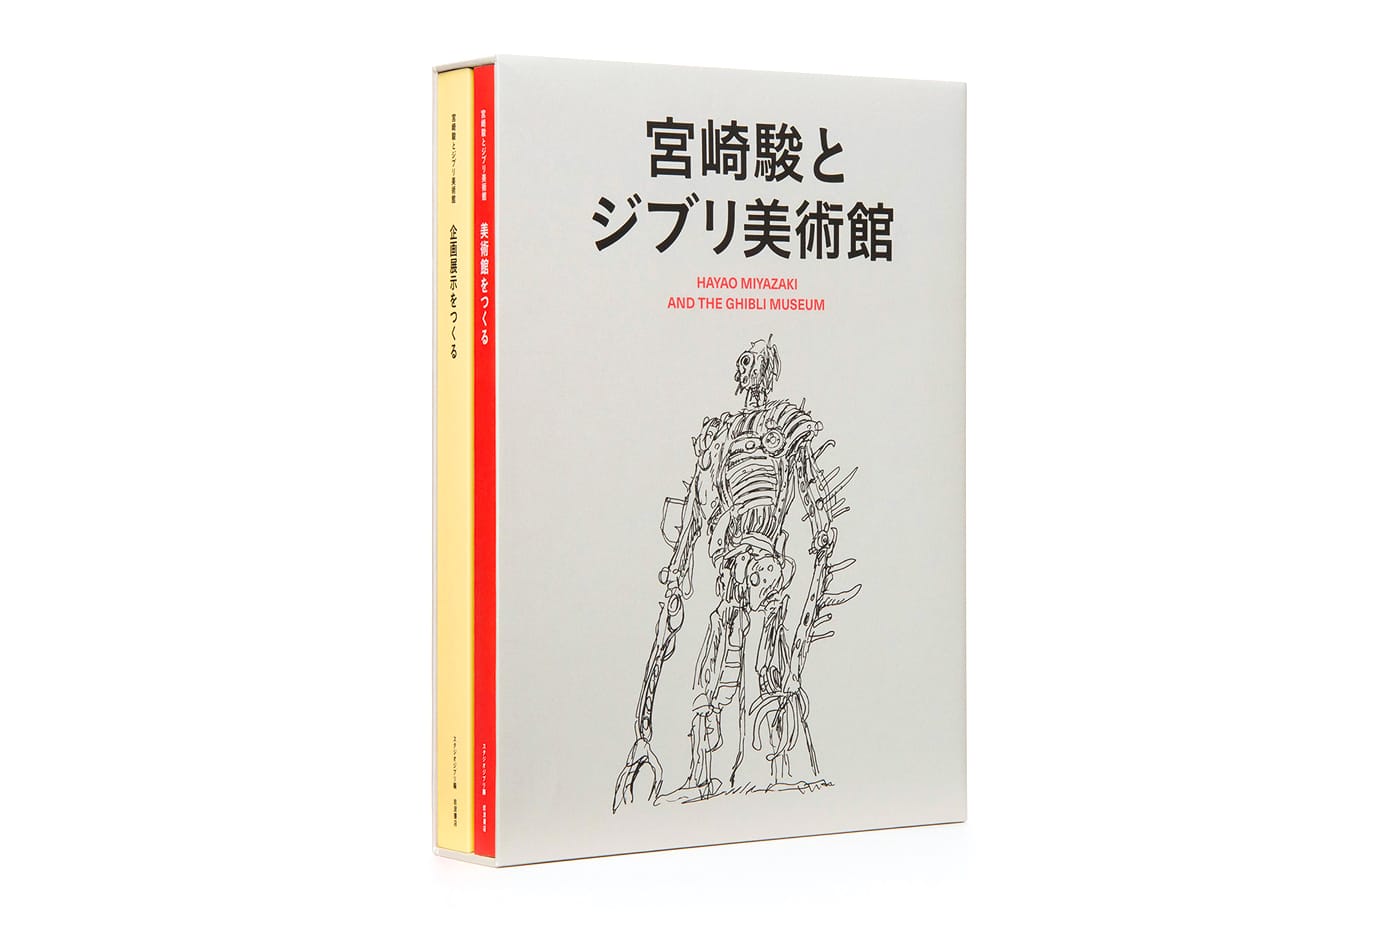 Hayao Miyazaki And The Ghibli Museum Art Book Review Part II - Halcyon  Realms - Art Book Reviews - Anime, Manga, Film, Photography